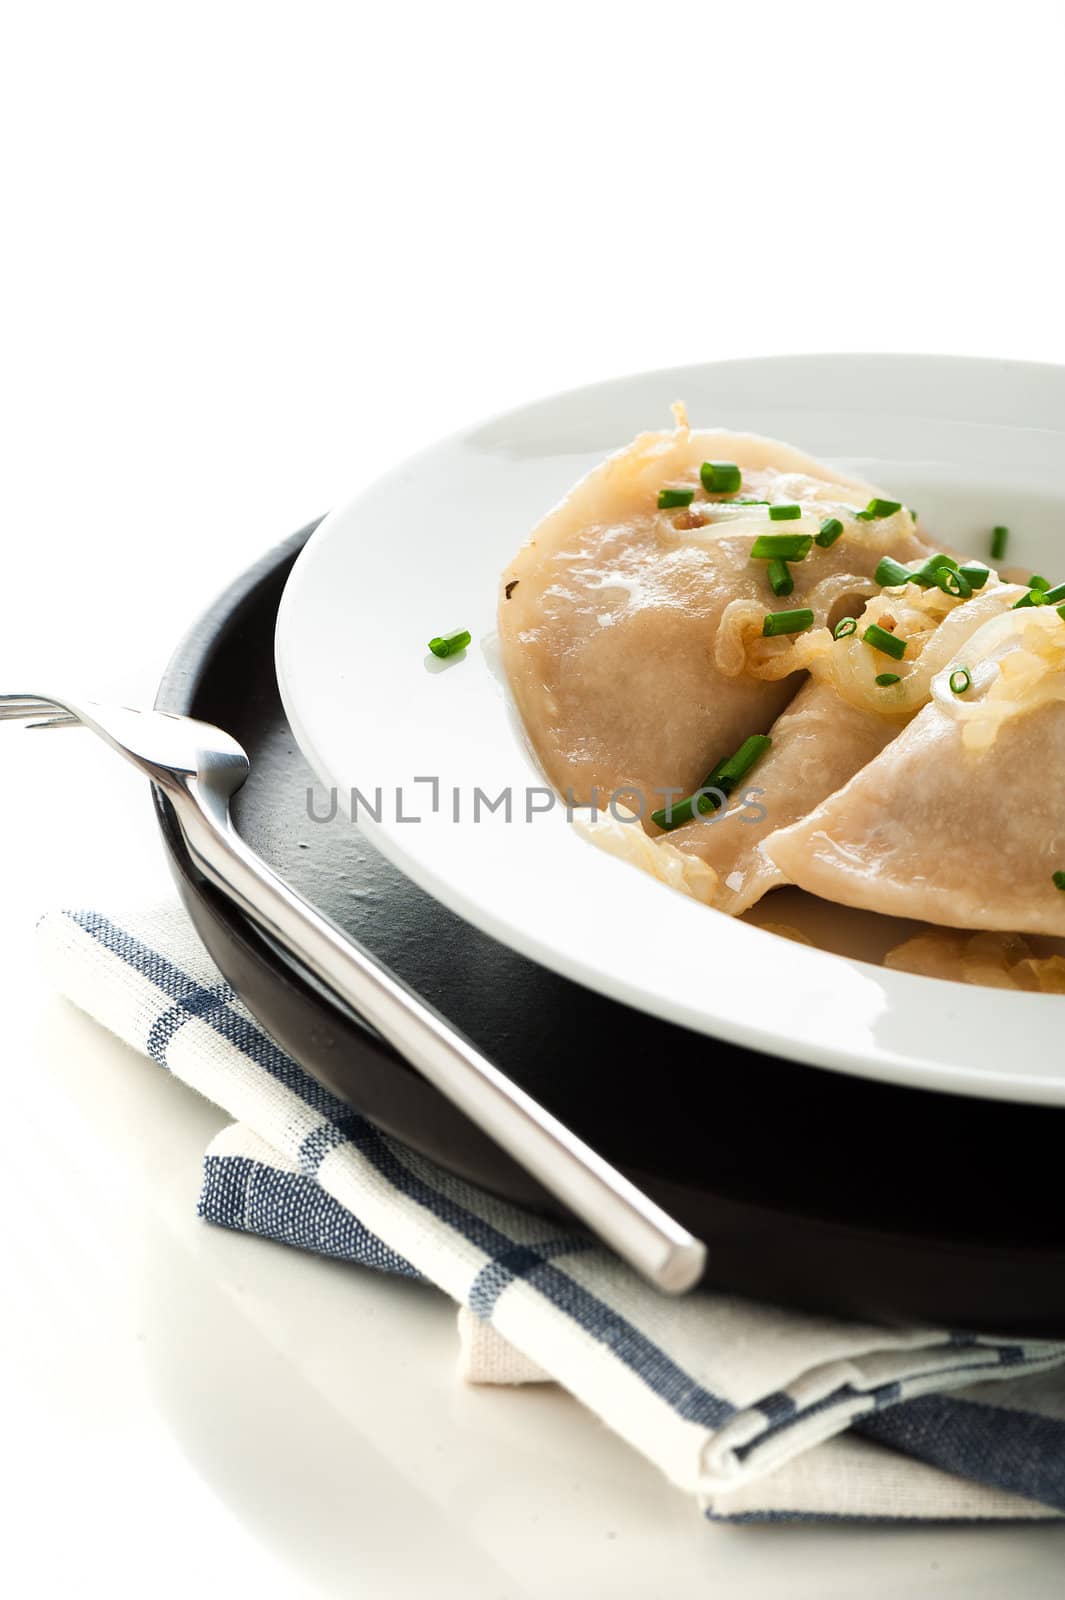 Homemade pierogi or dumpling on white and black plate